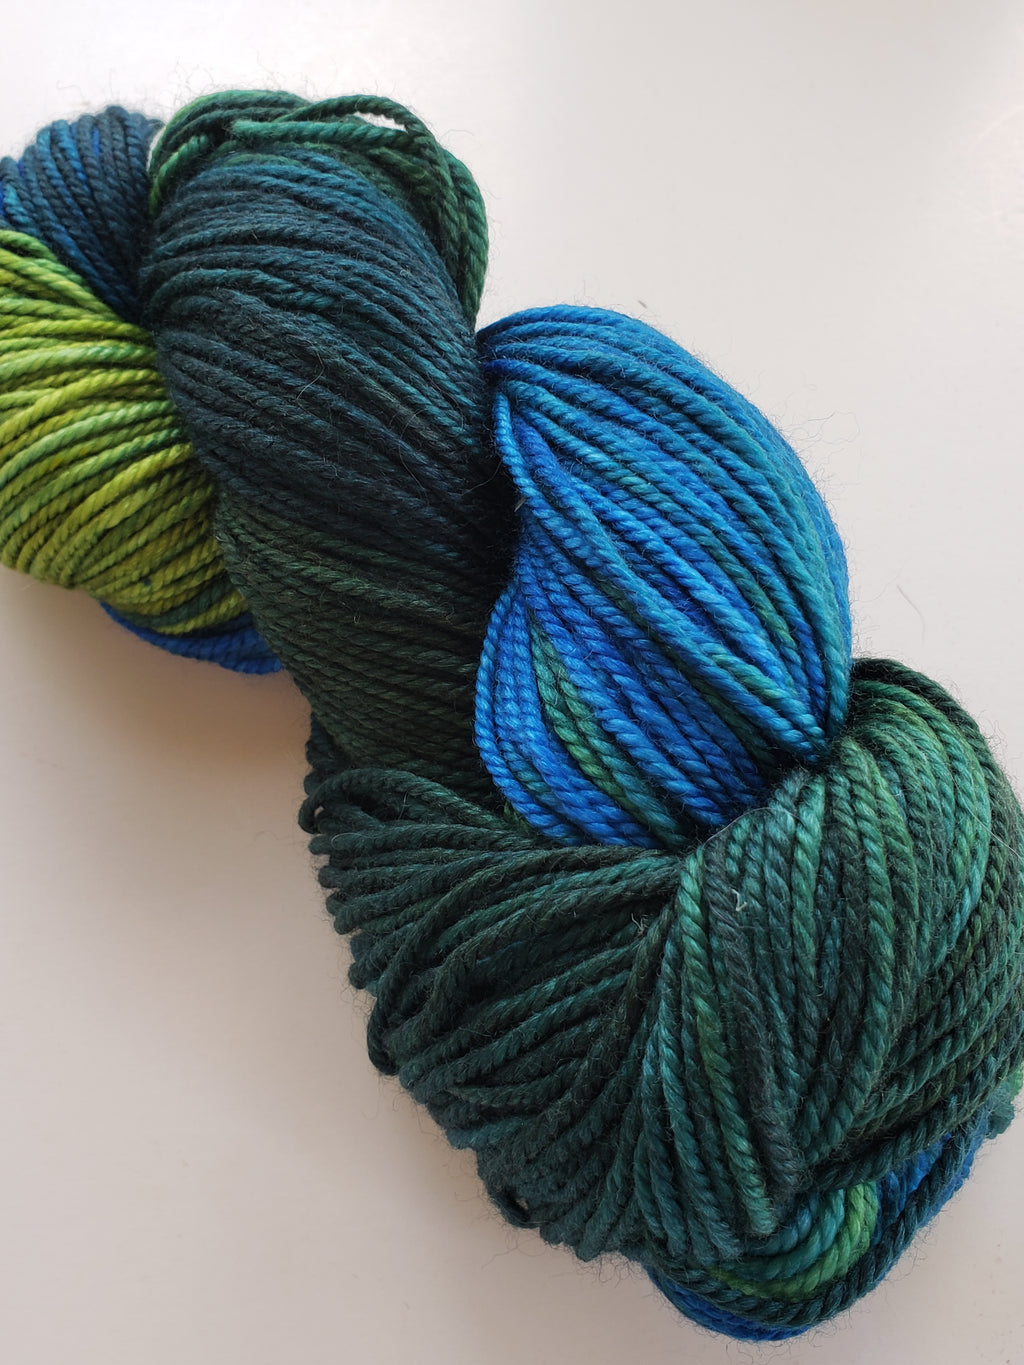 Woolie Silk - LAND AND SKY - Fleece Artist Hand Dyed Yarn Nova Scotia